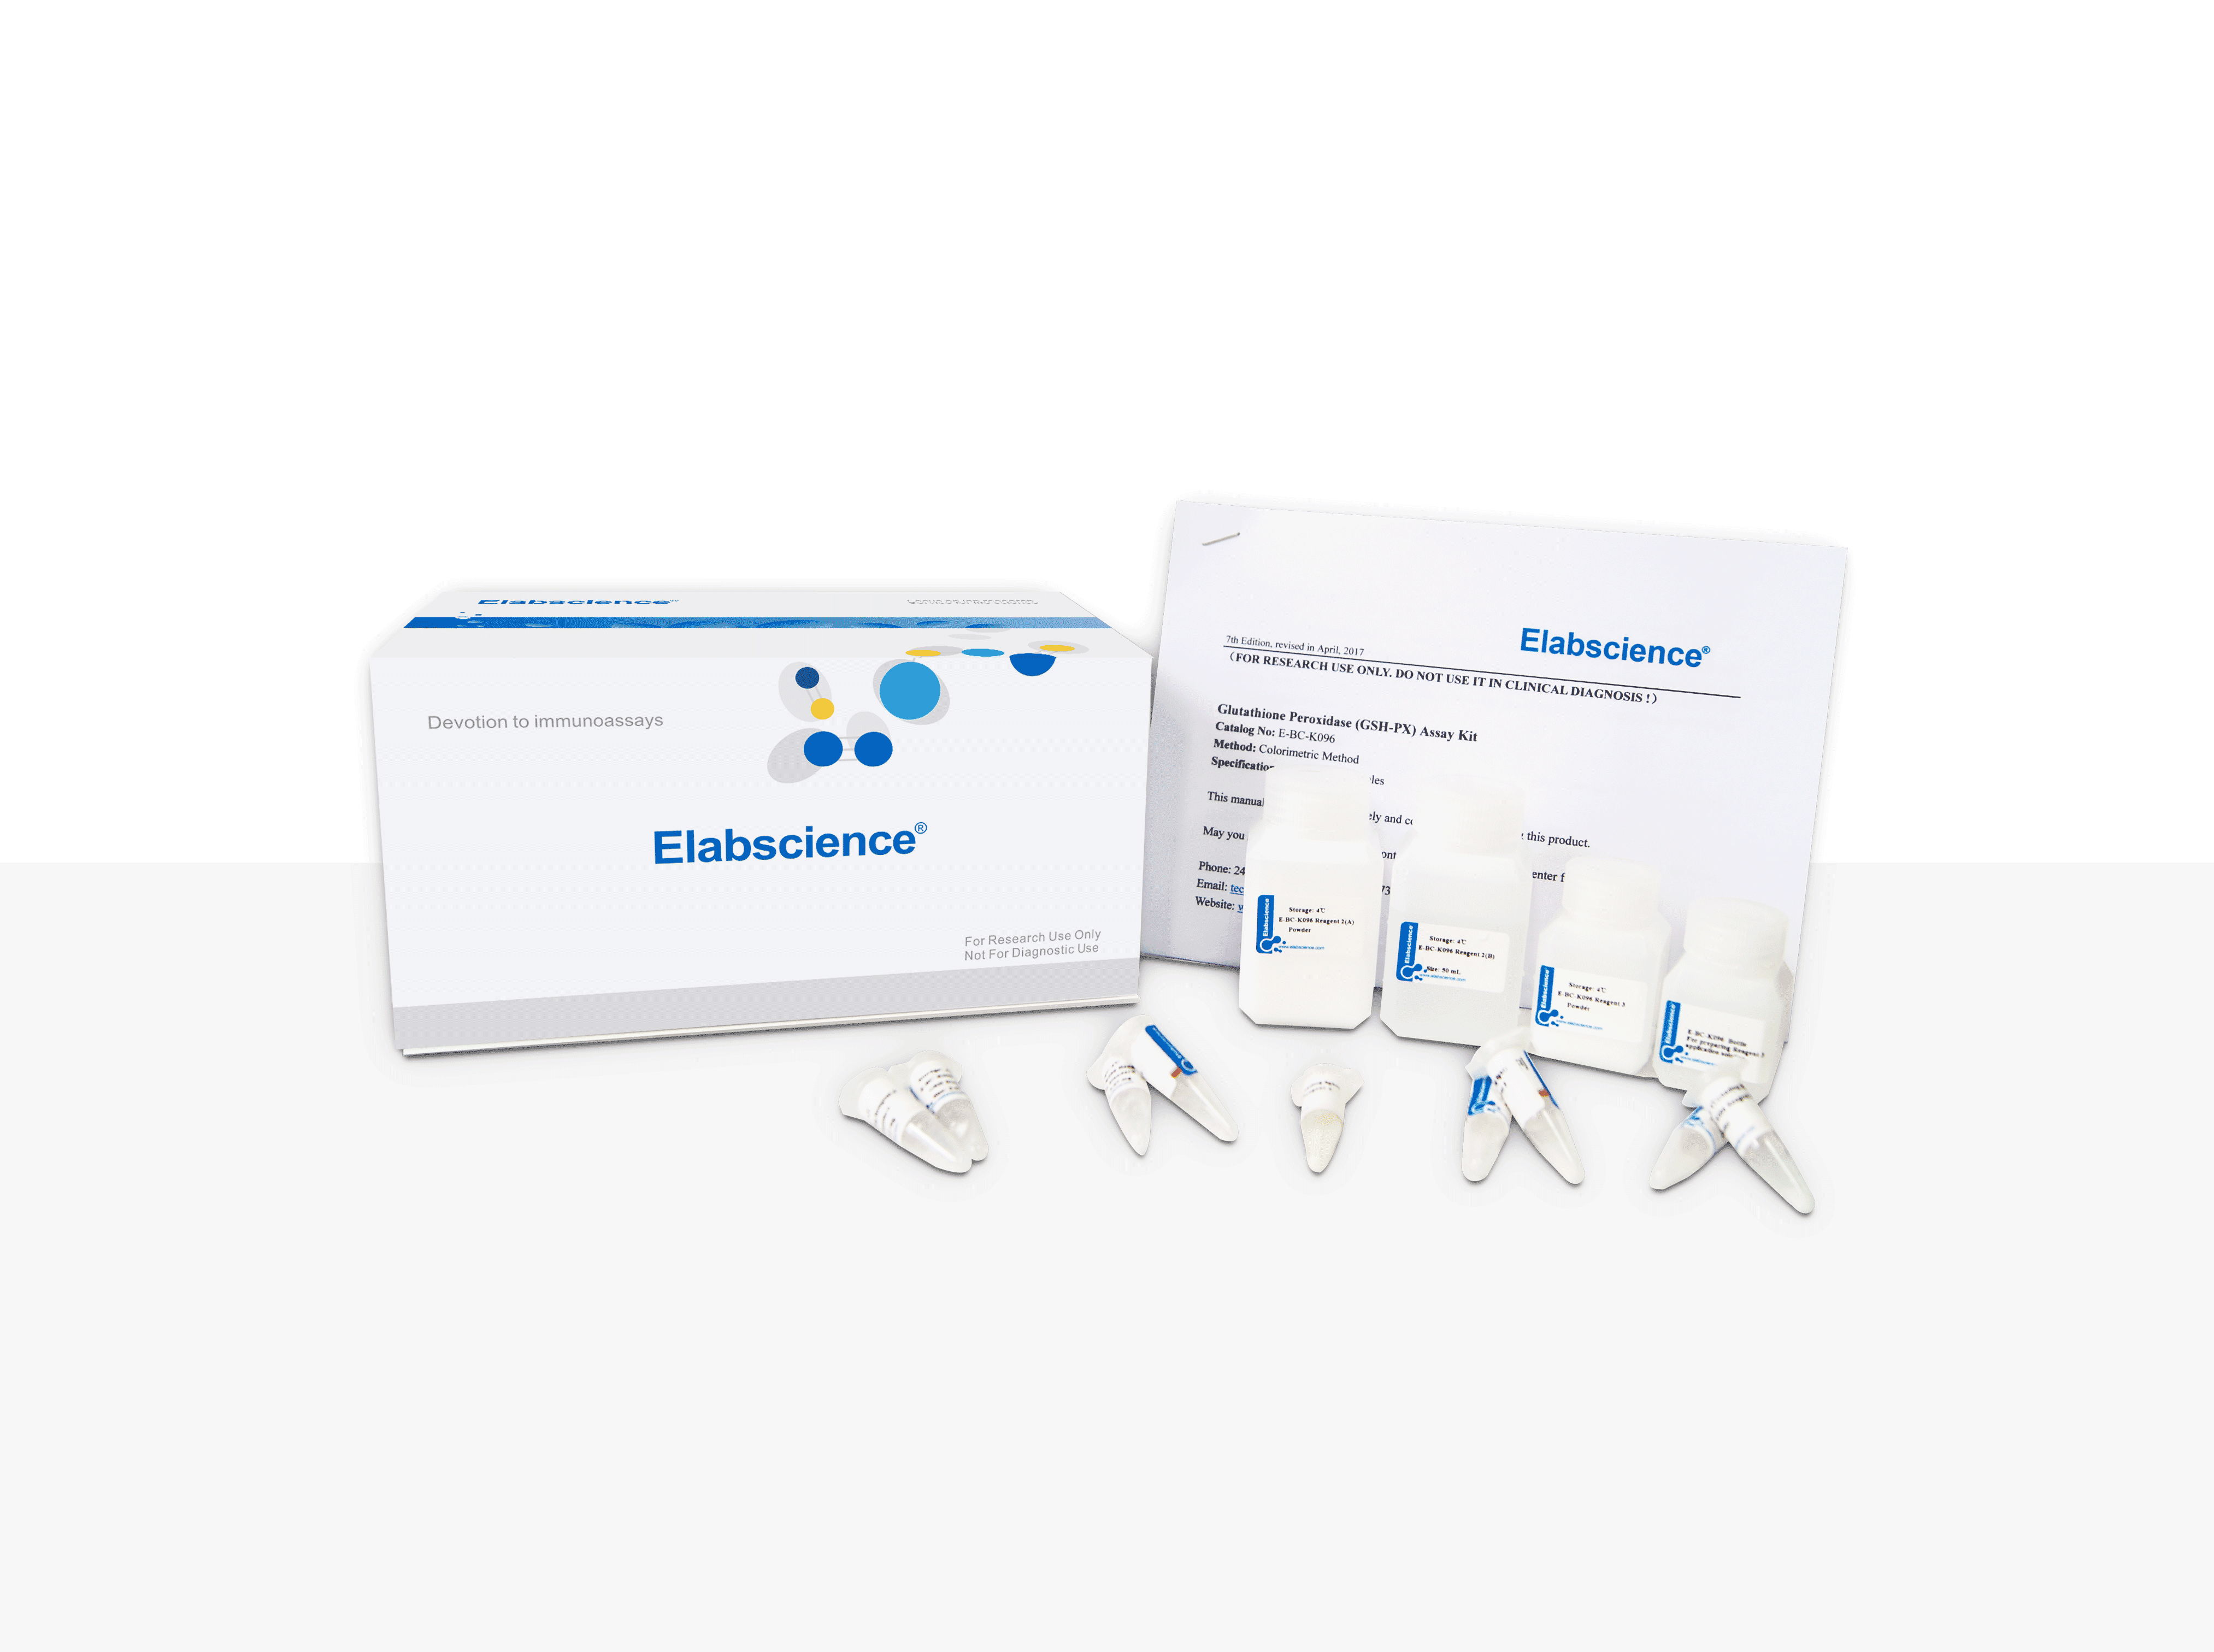 [E-BC-K125-S] Choline Acetyltransferase (ChAT) Activity Assay Kit (Tissue Samples)